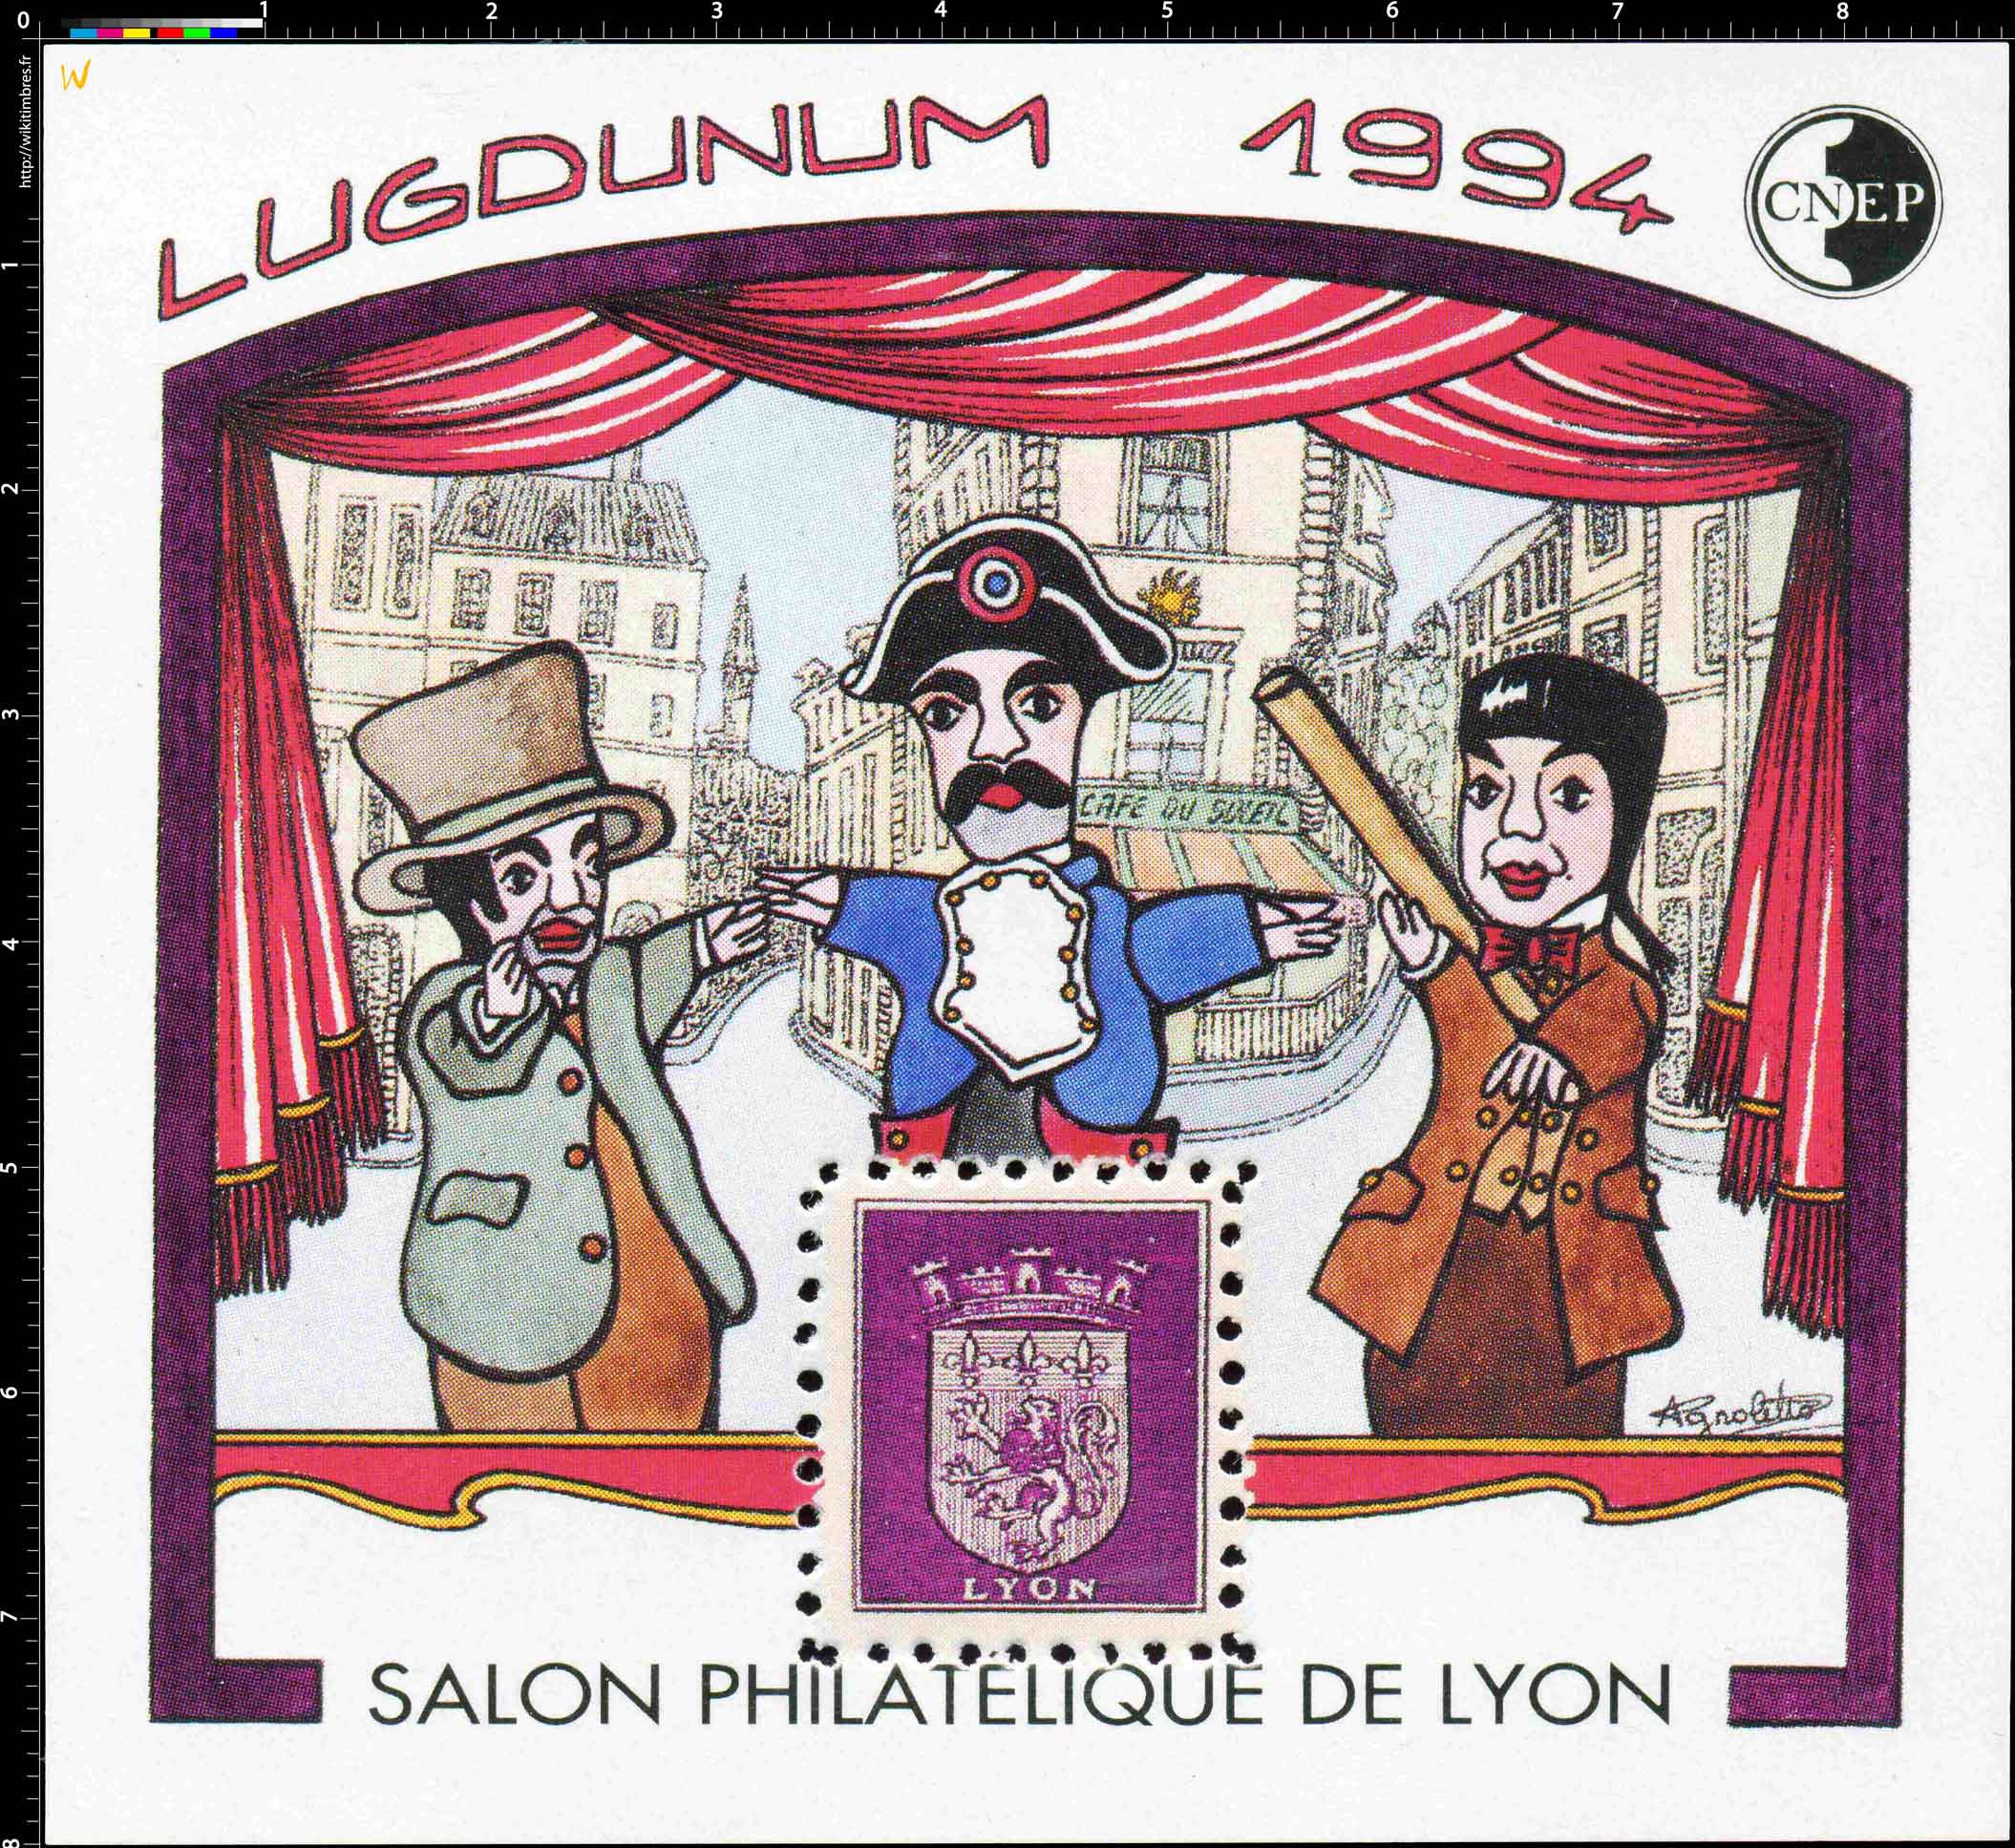 1994 Lugdunum Salon philatélique de Lyon CNEP